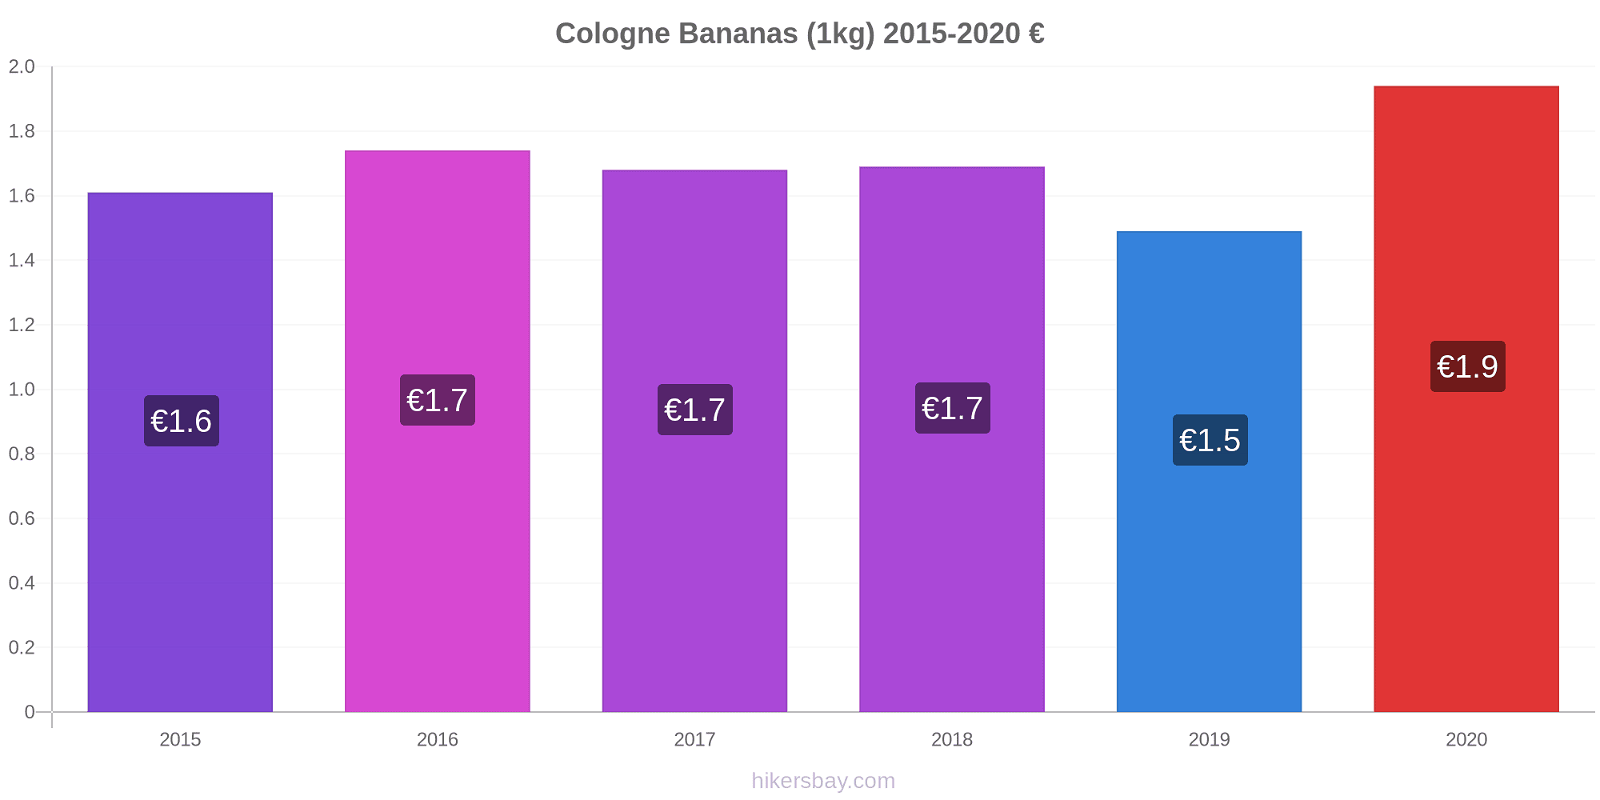 Cologne price changes Bananas (1kg) hikersbay.com